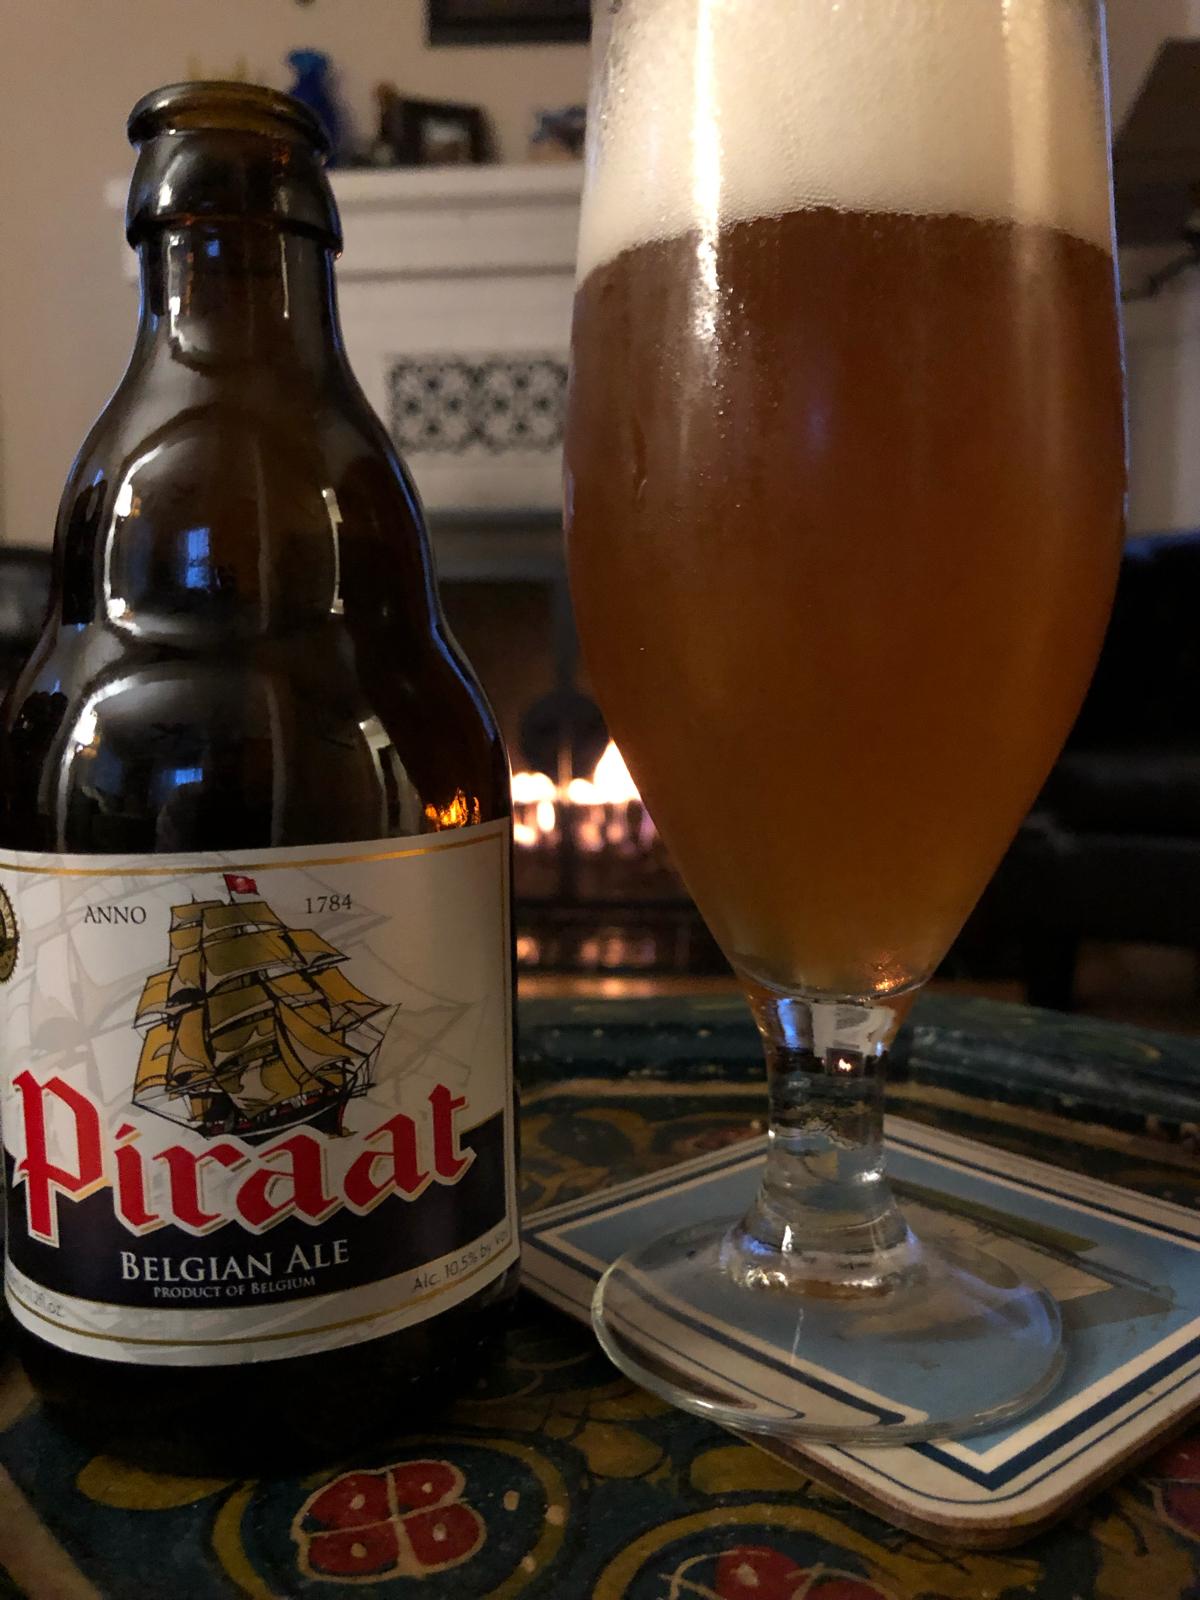 Piraat Belgian Ale